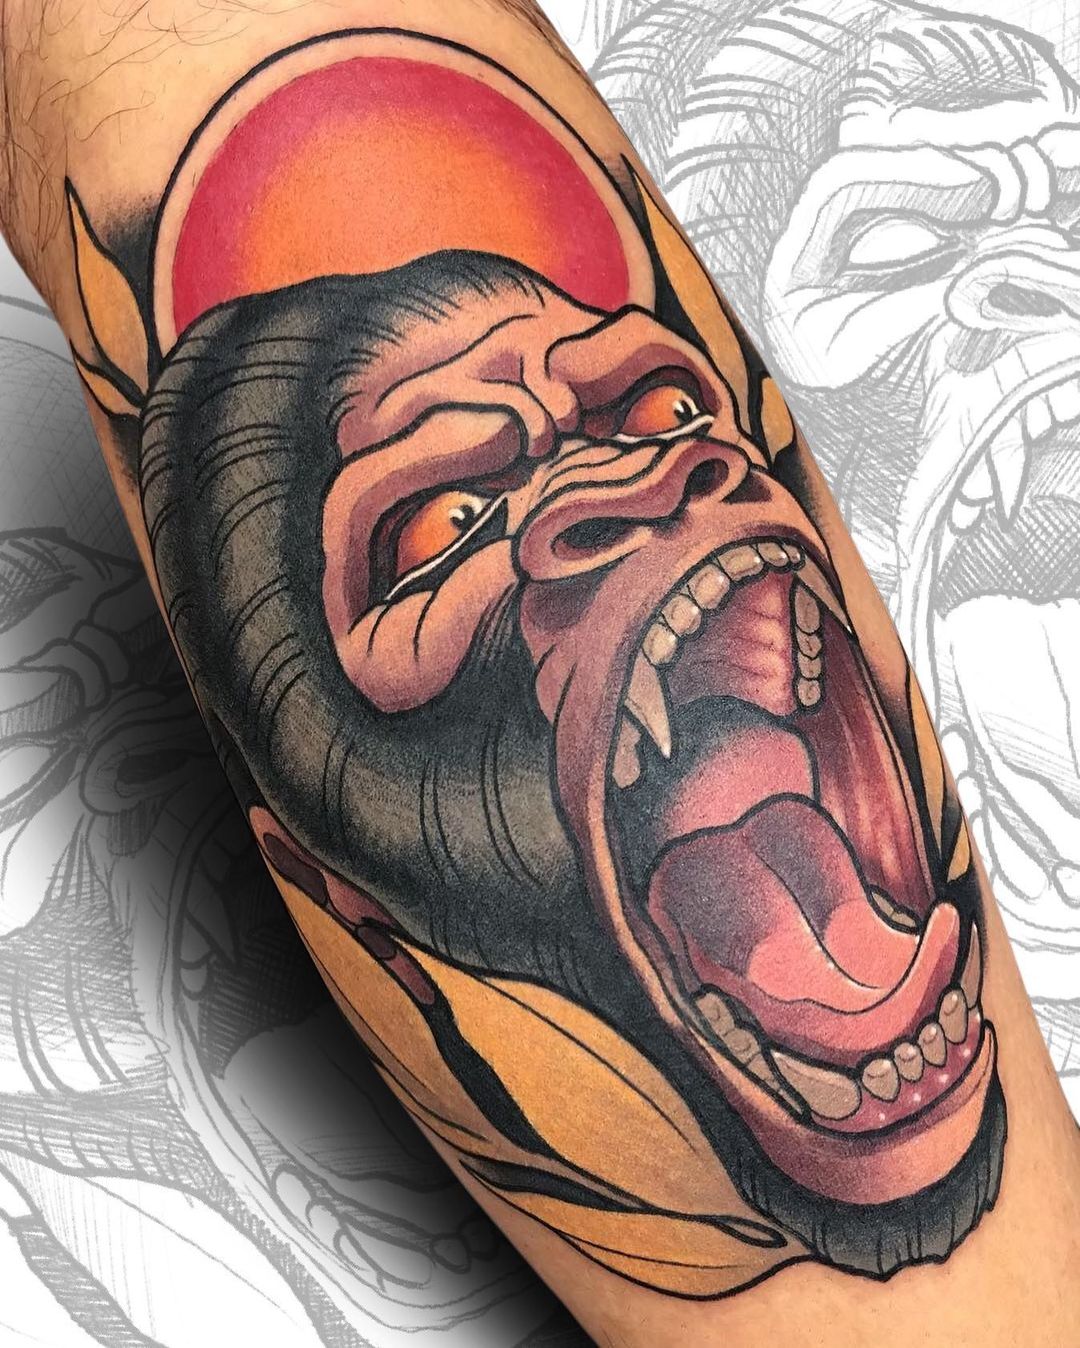 Amazing monkey tattoo by